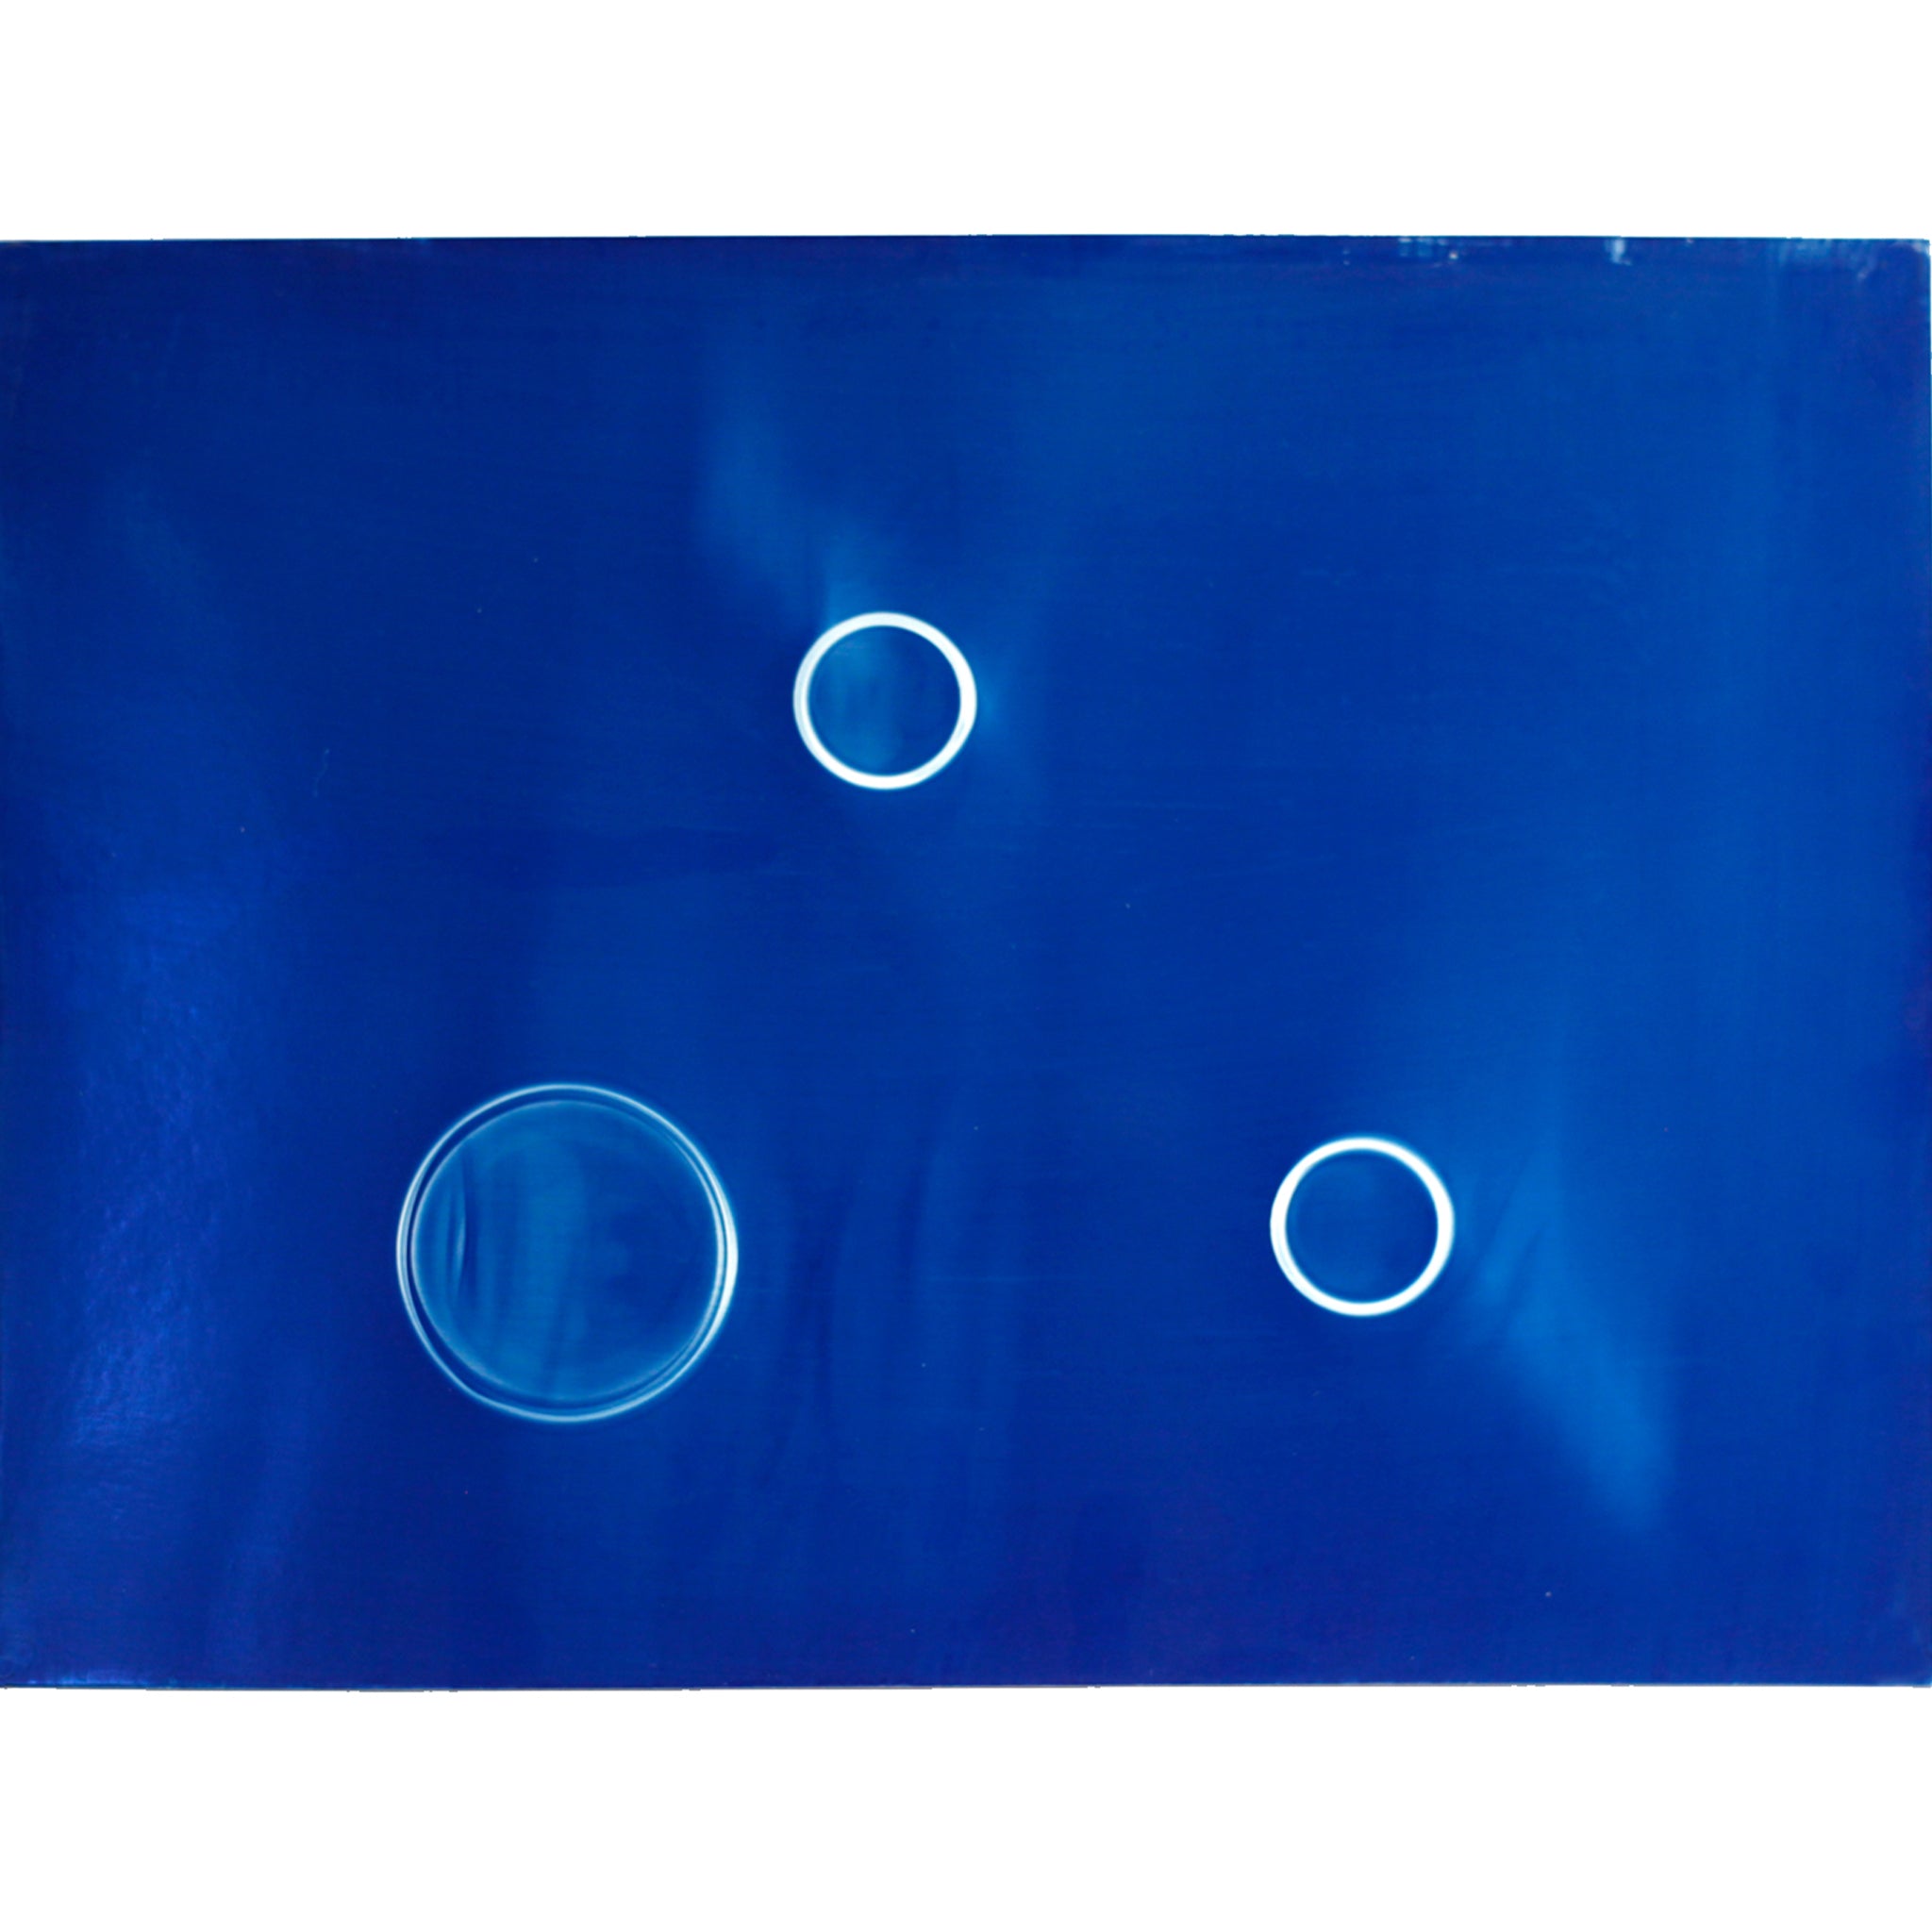 Jens Sundheim<br>《unique cyano type prints》006